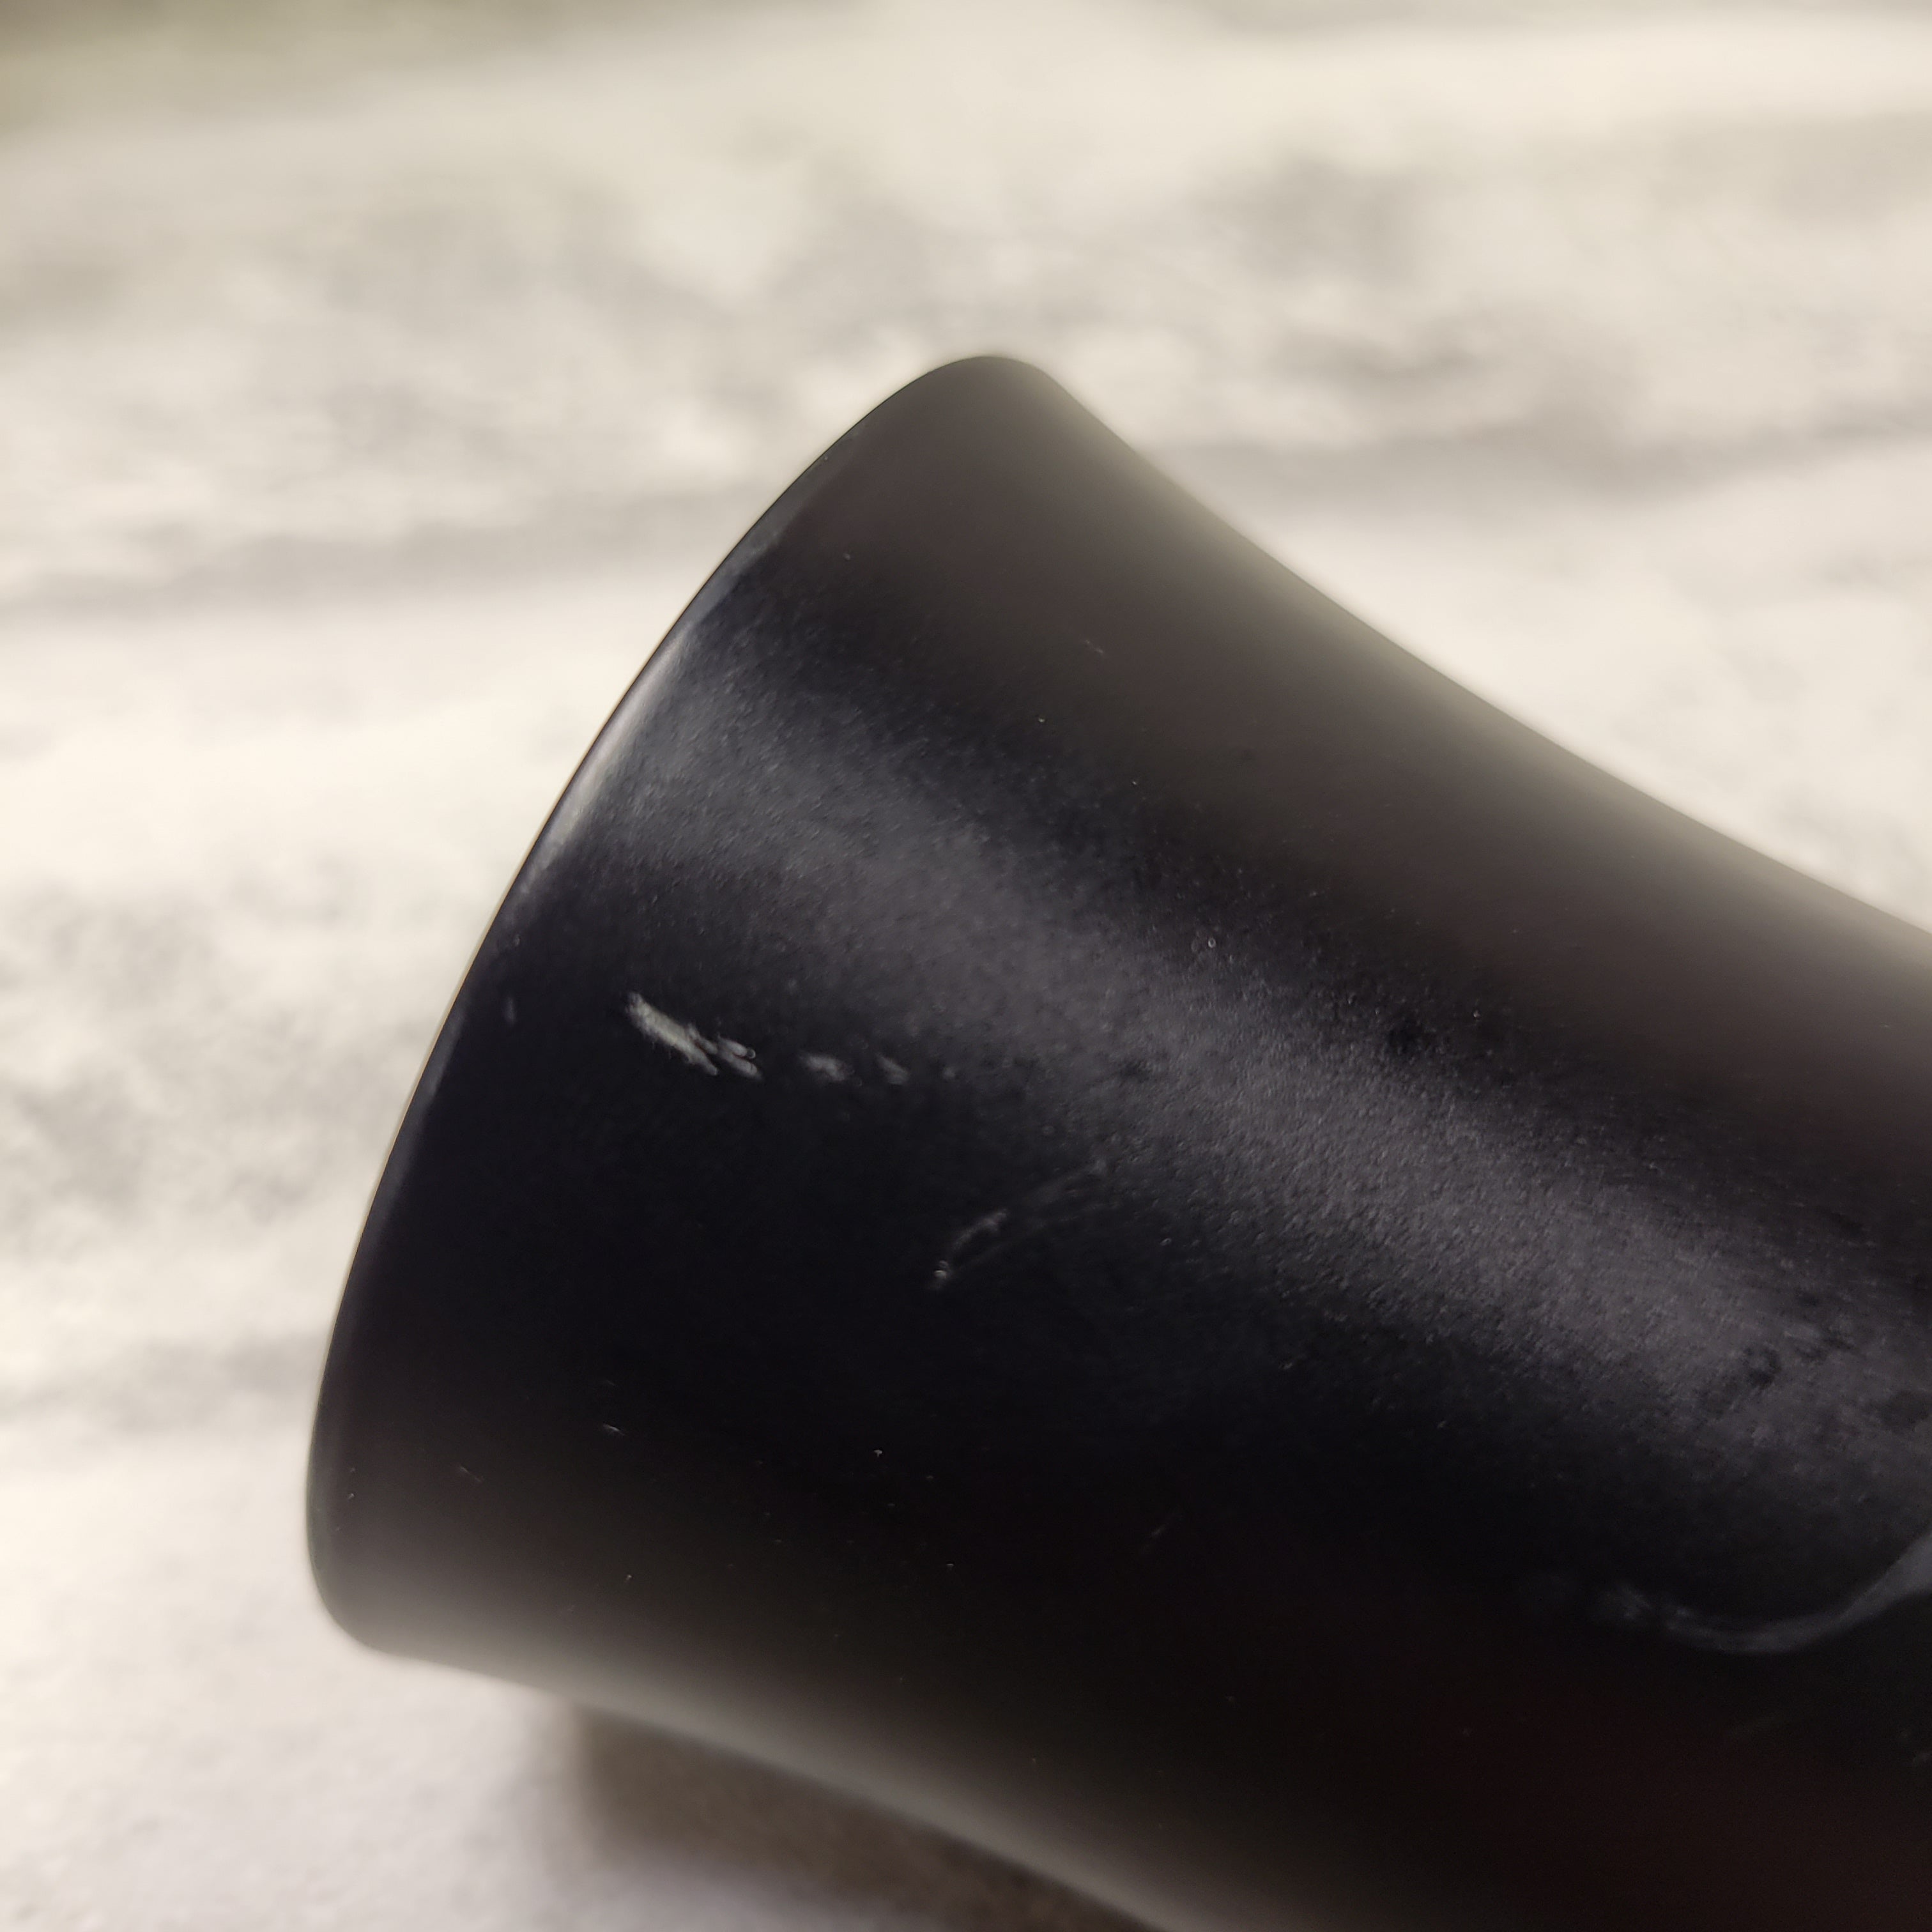 MOEN Genta Single-Handle 1-Spray Tub /Shower Faucet Matte Black (Valve Included) (7625850487022)